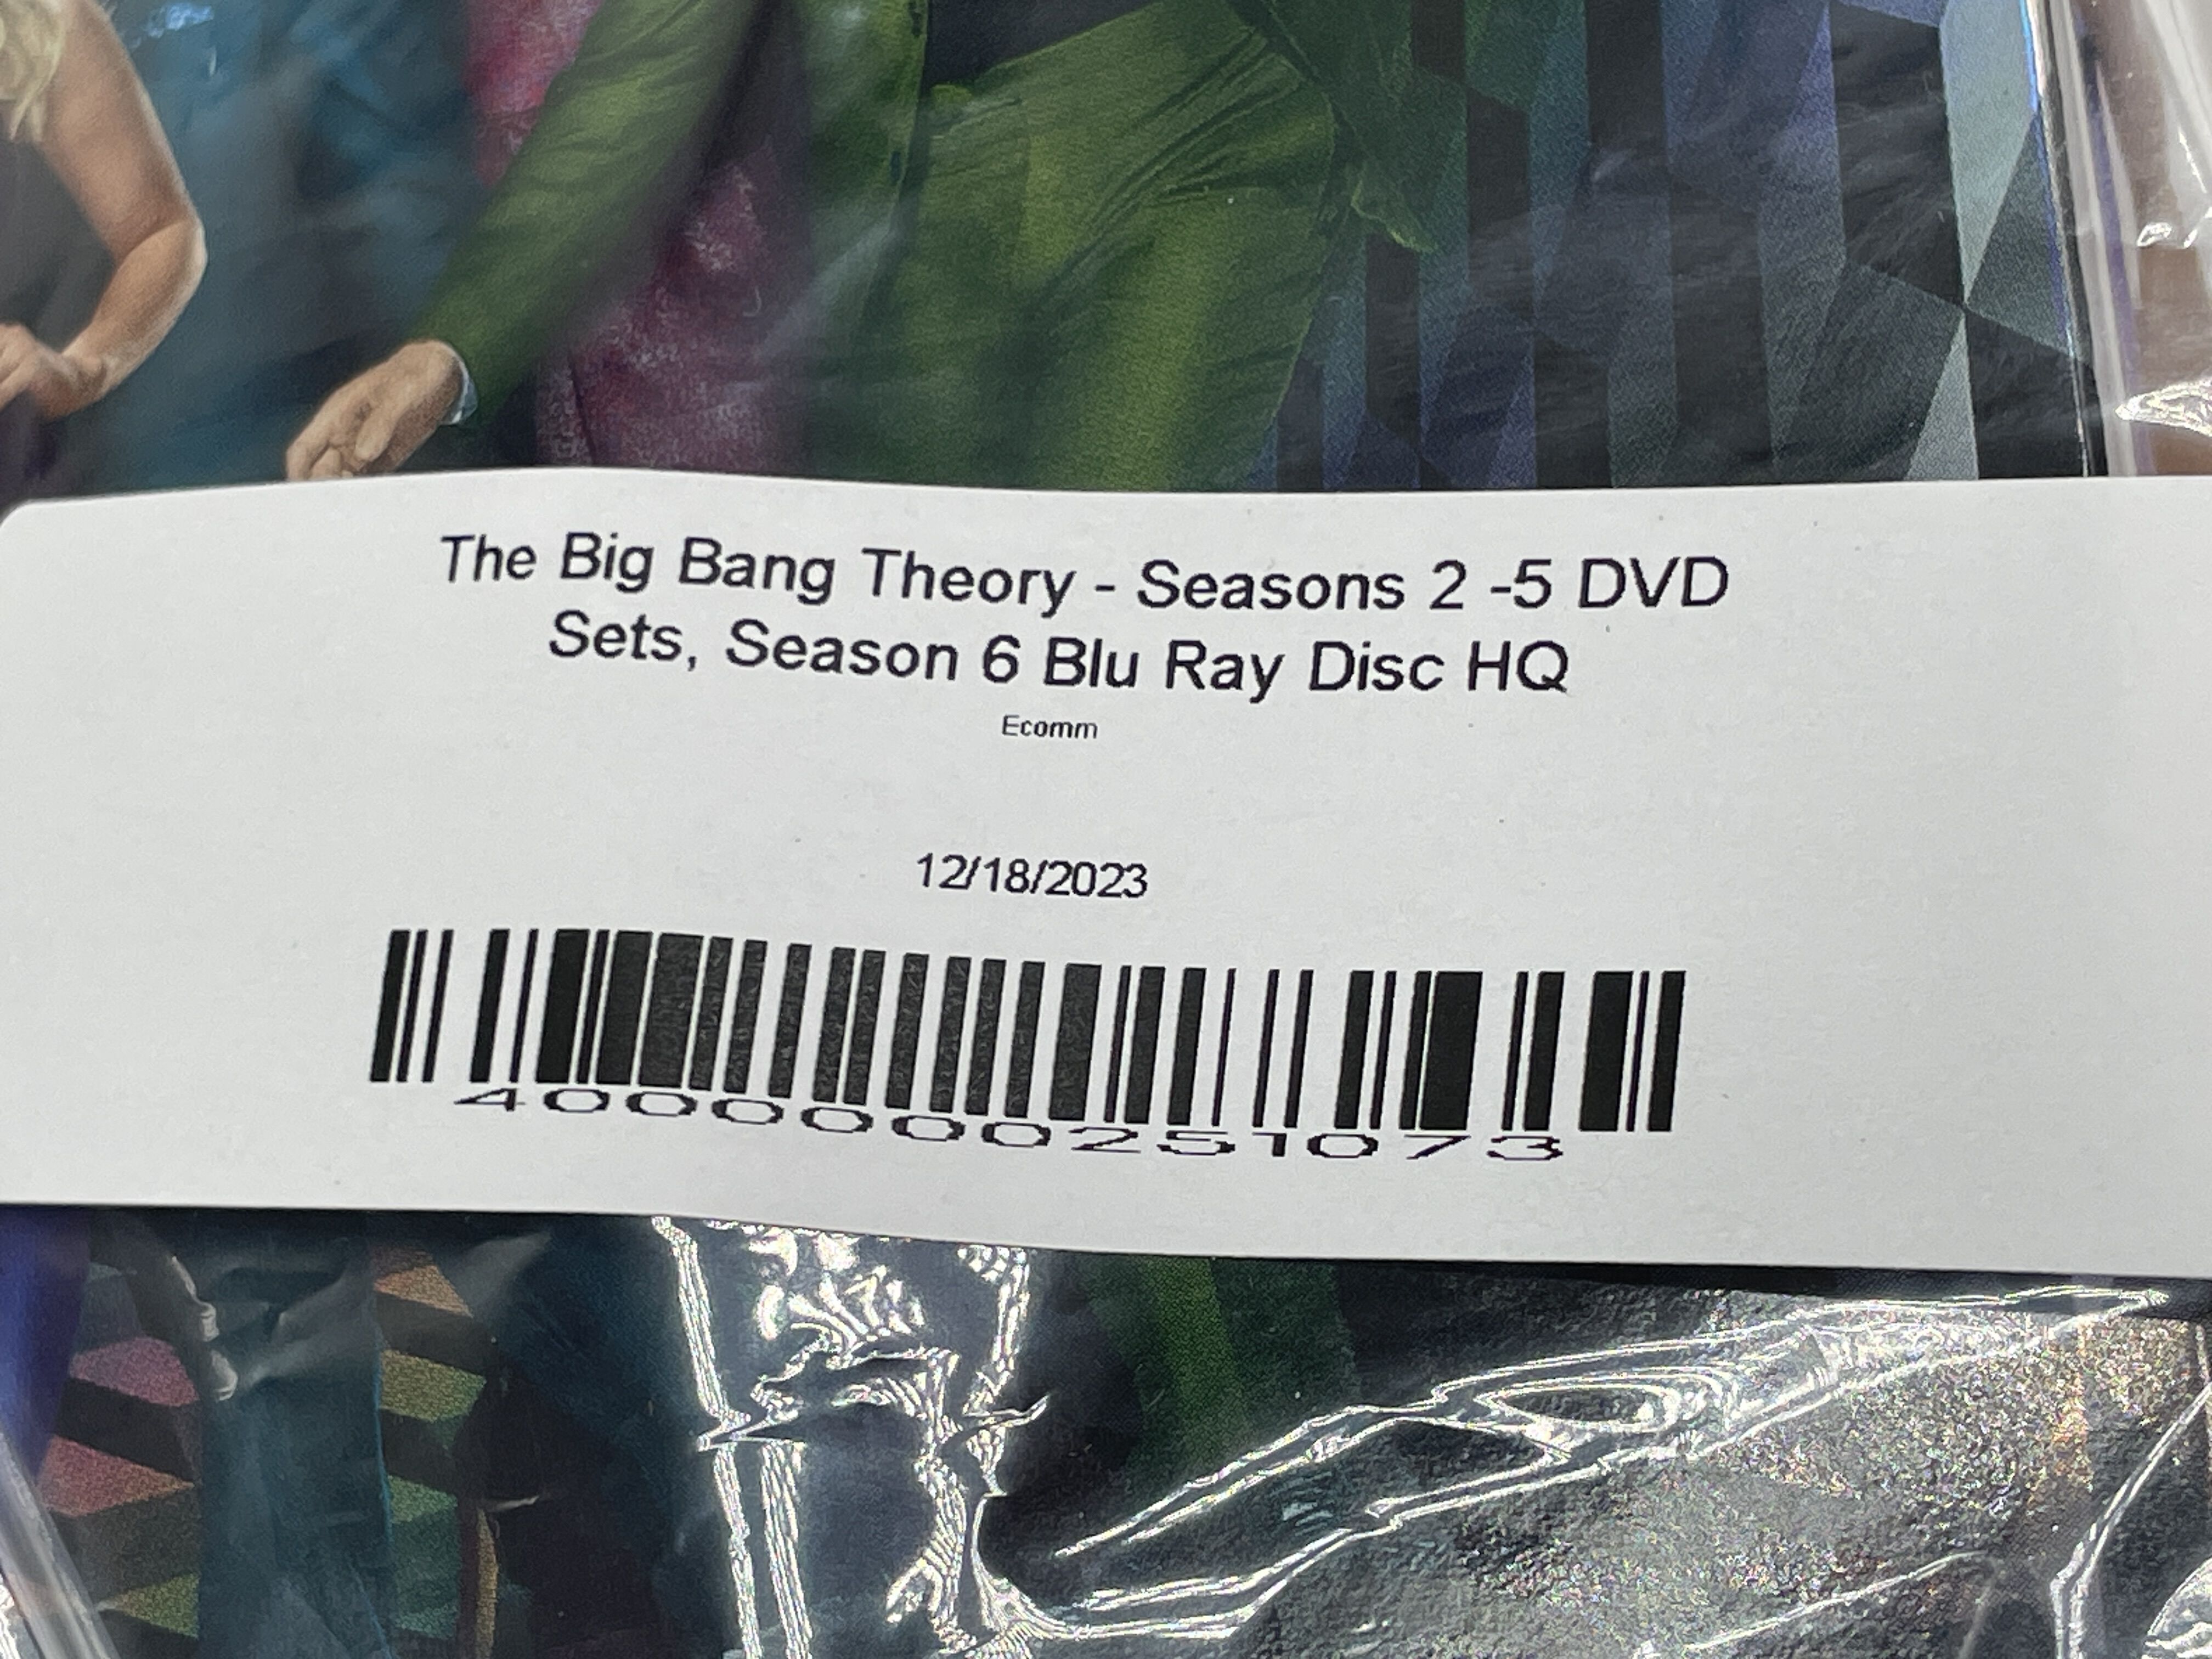 The Big Bang Theory Comedy Complete Seasons 2-5 DVD & Blu Ray Discs Set